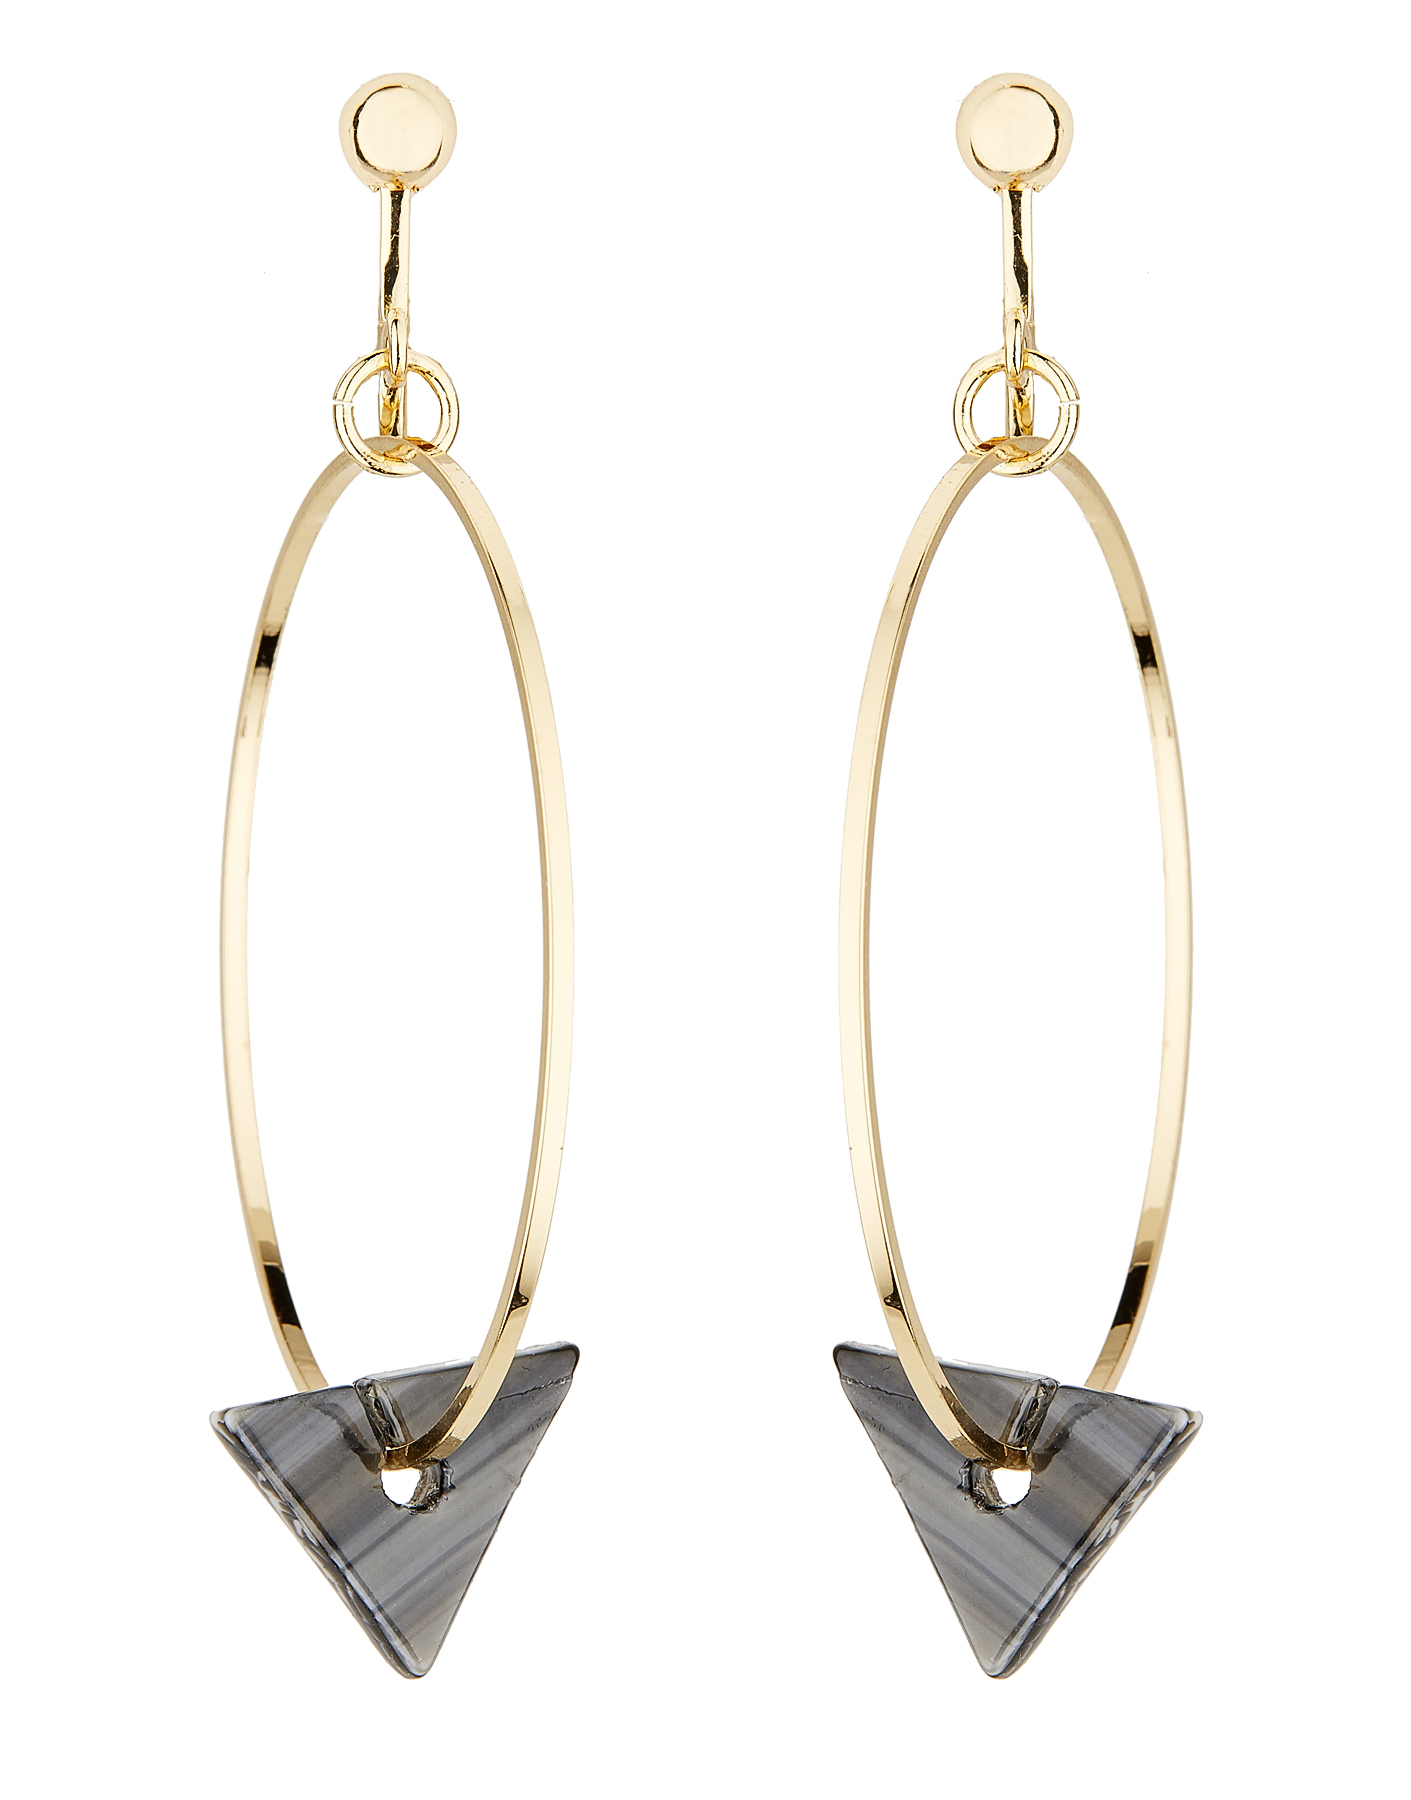 Clip On Hoop Earrings - Elda B - gold hoops with a black acrylic triangle